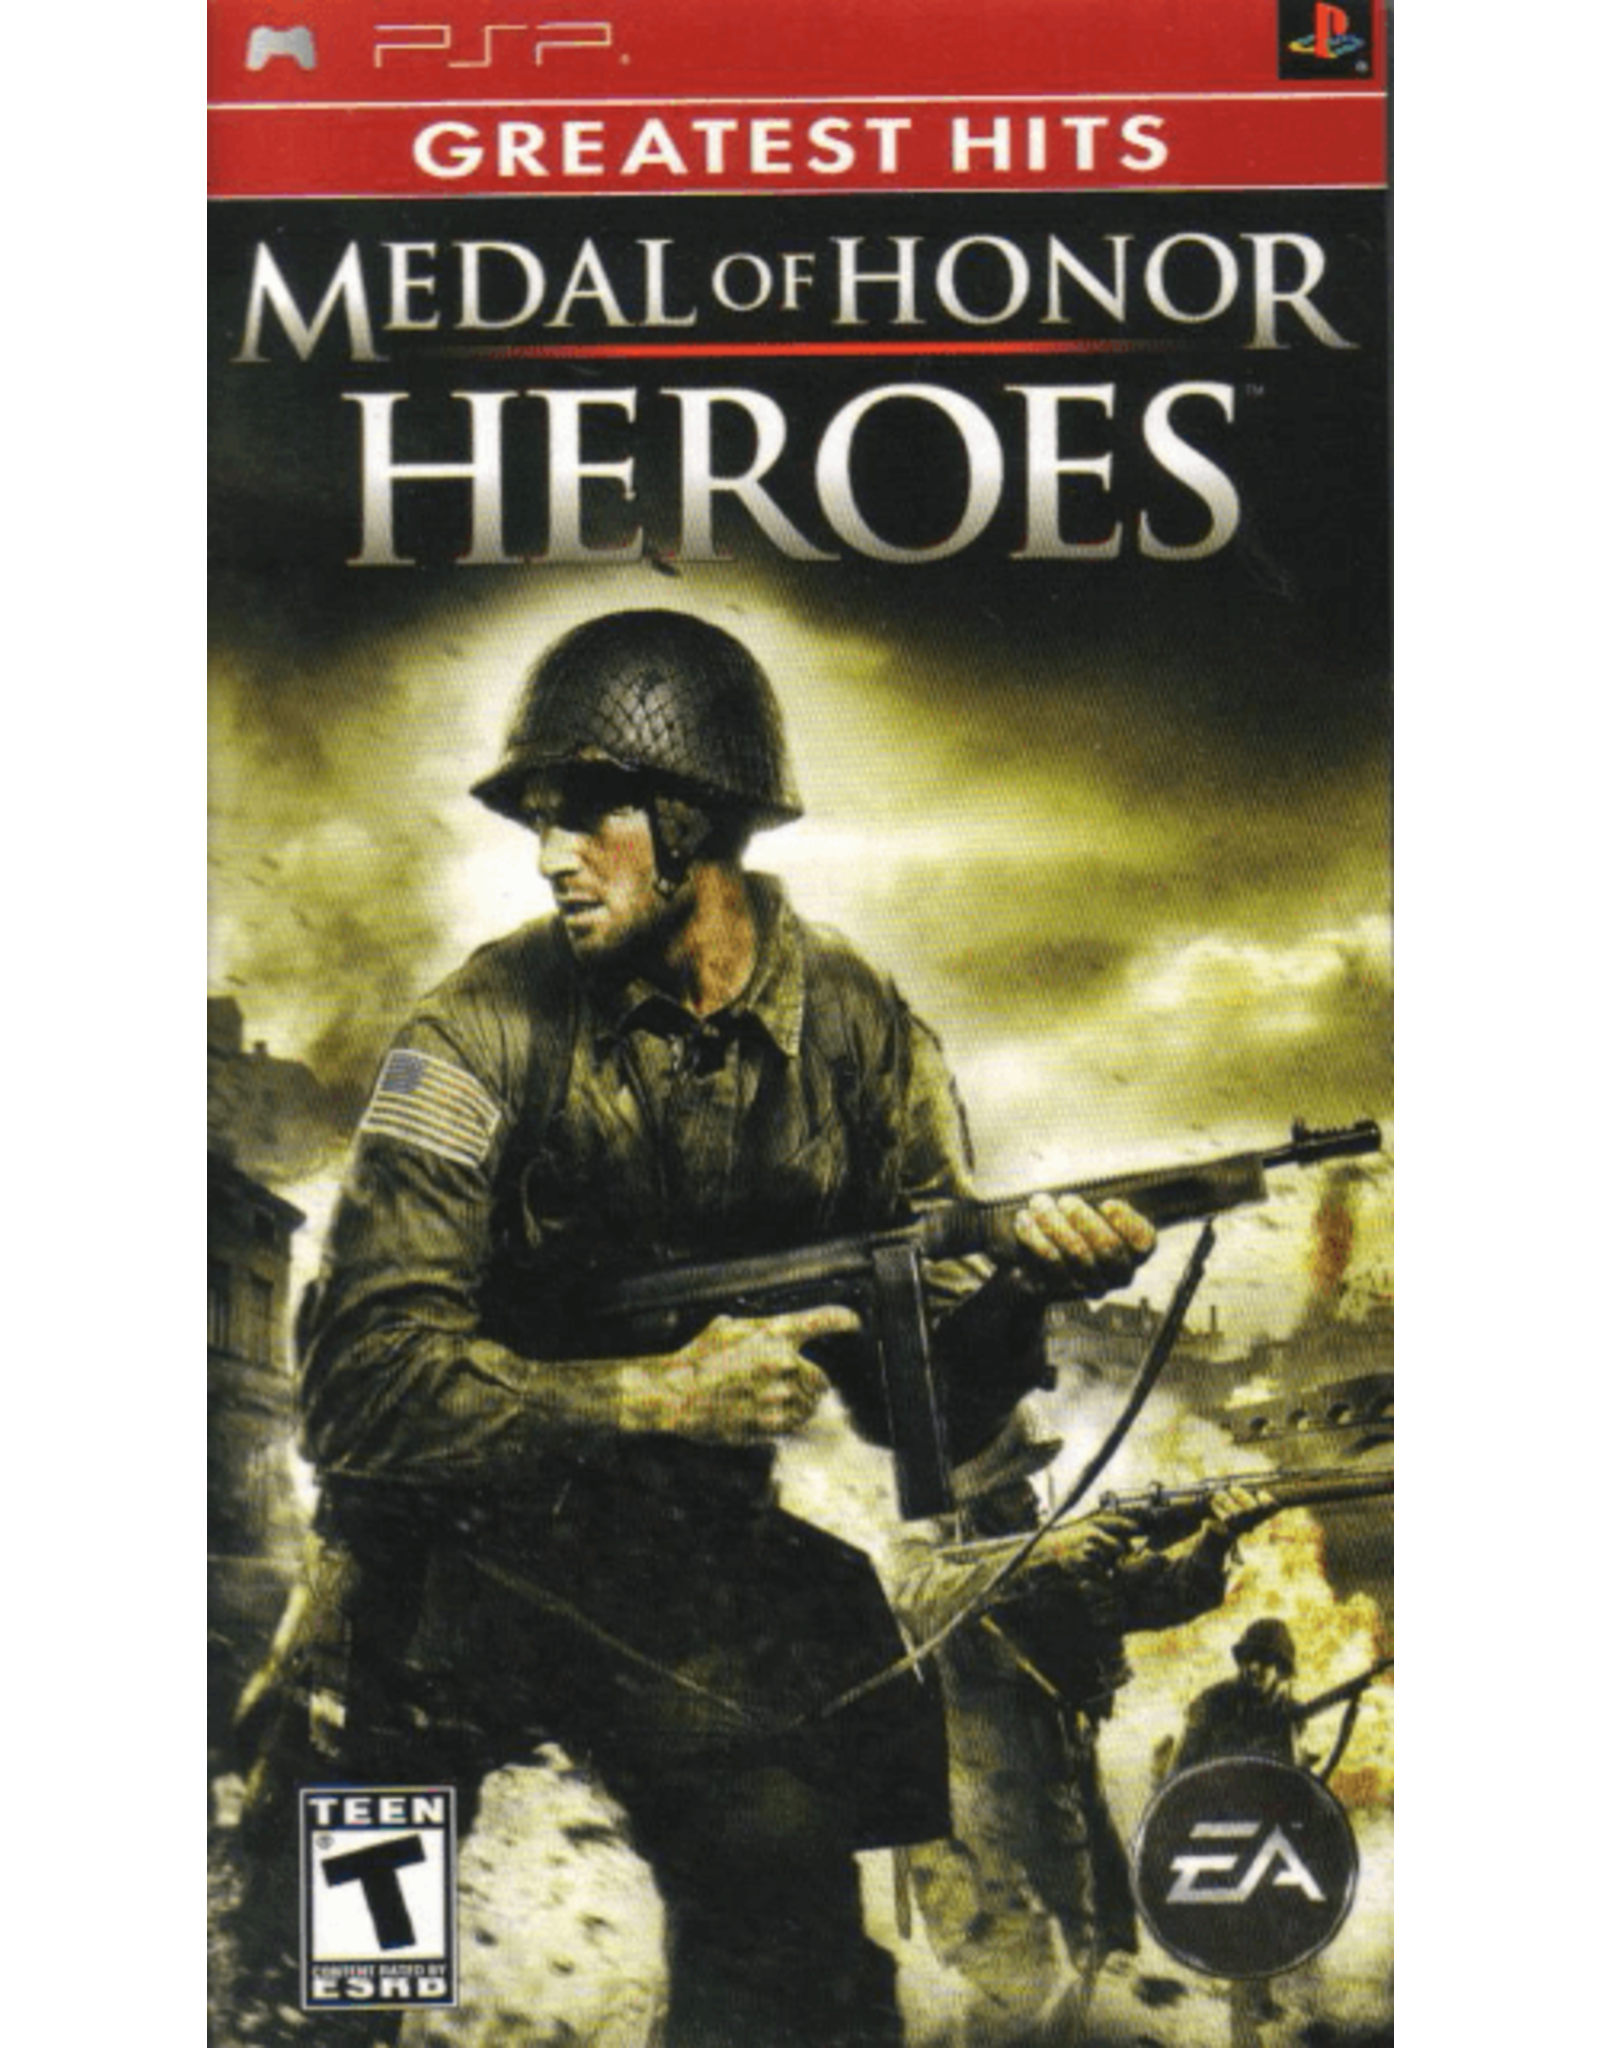 PSP Medal of Honor Heroes (Greatest Hits, CiB)